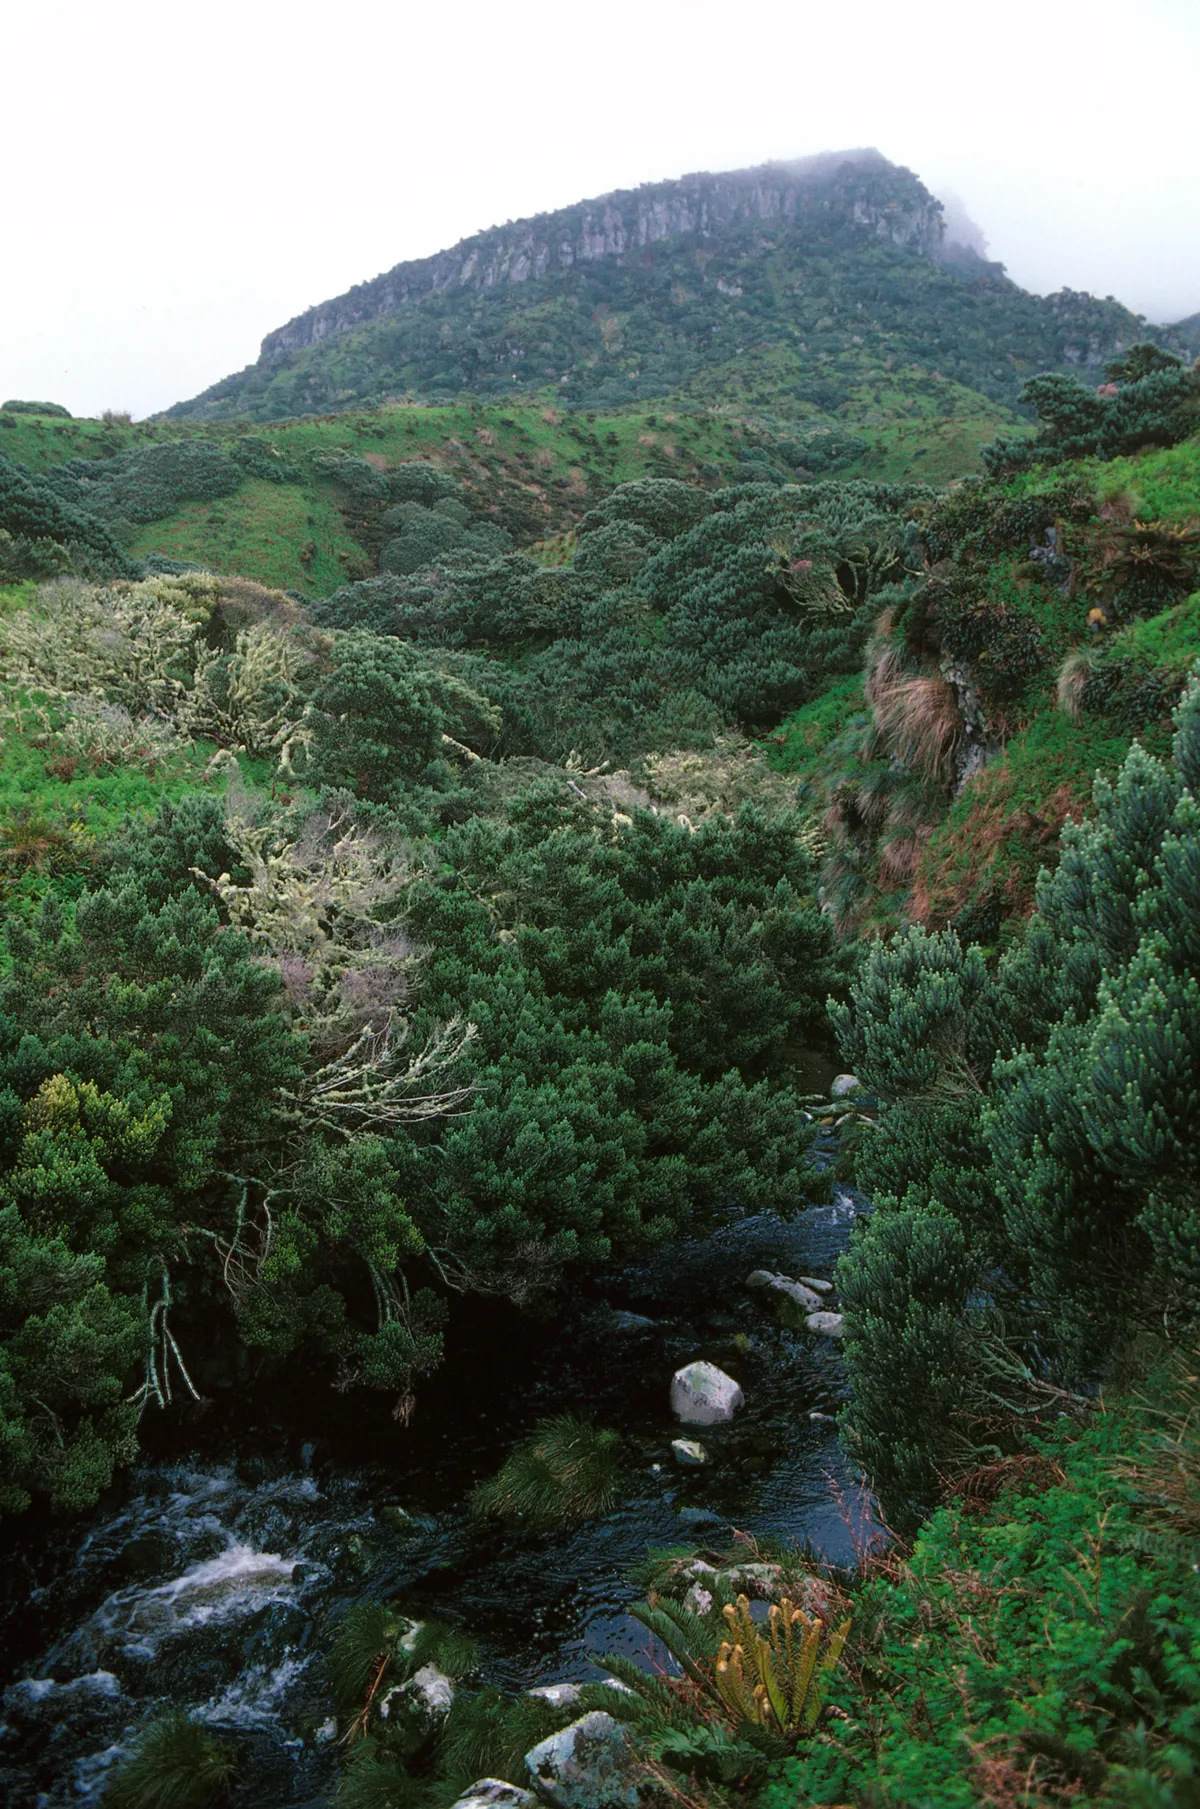 Gough Island and vegetation